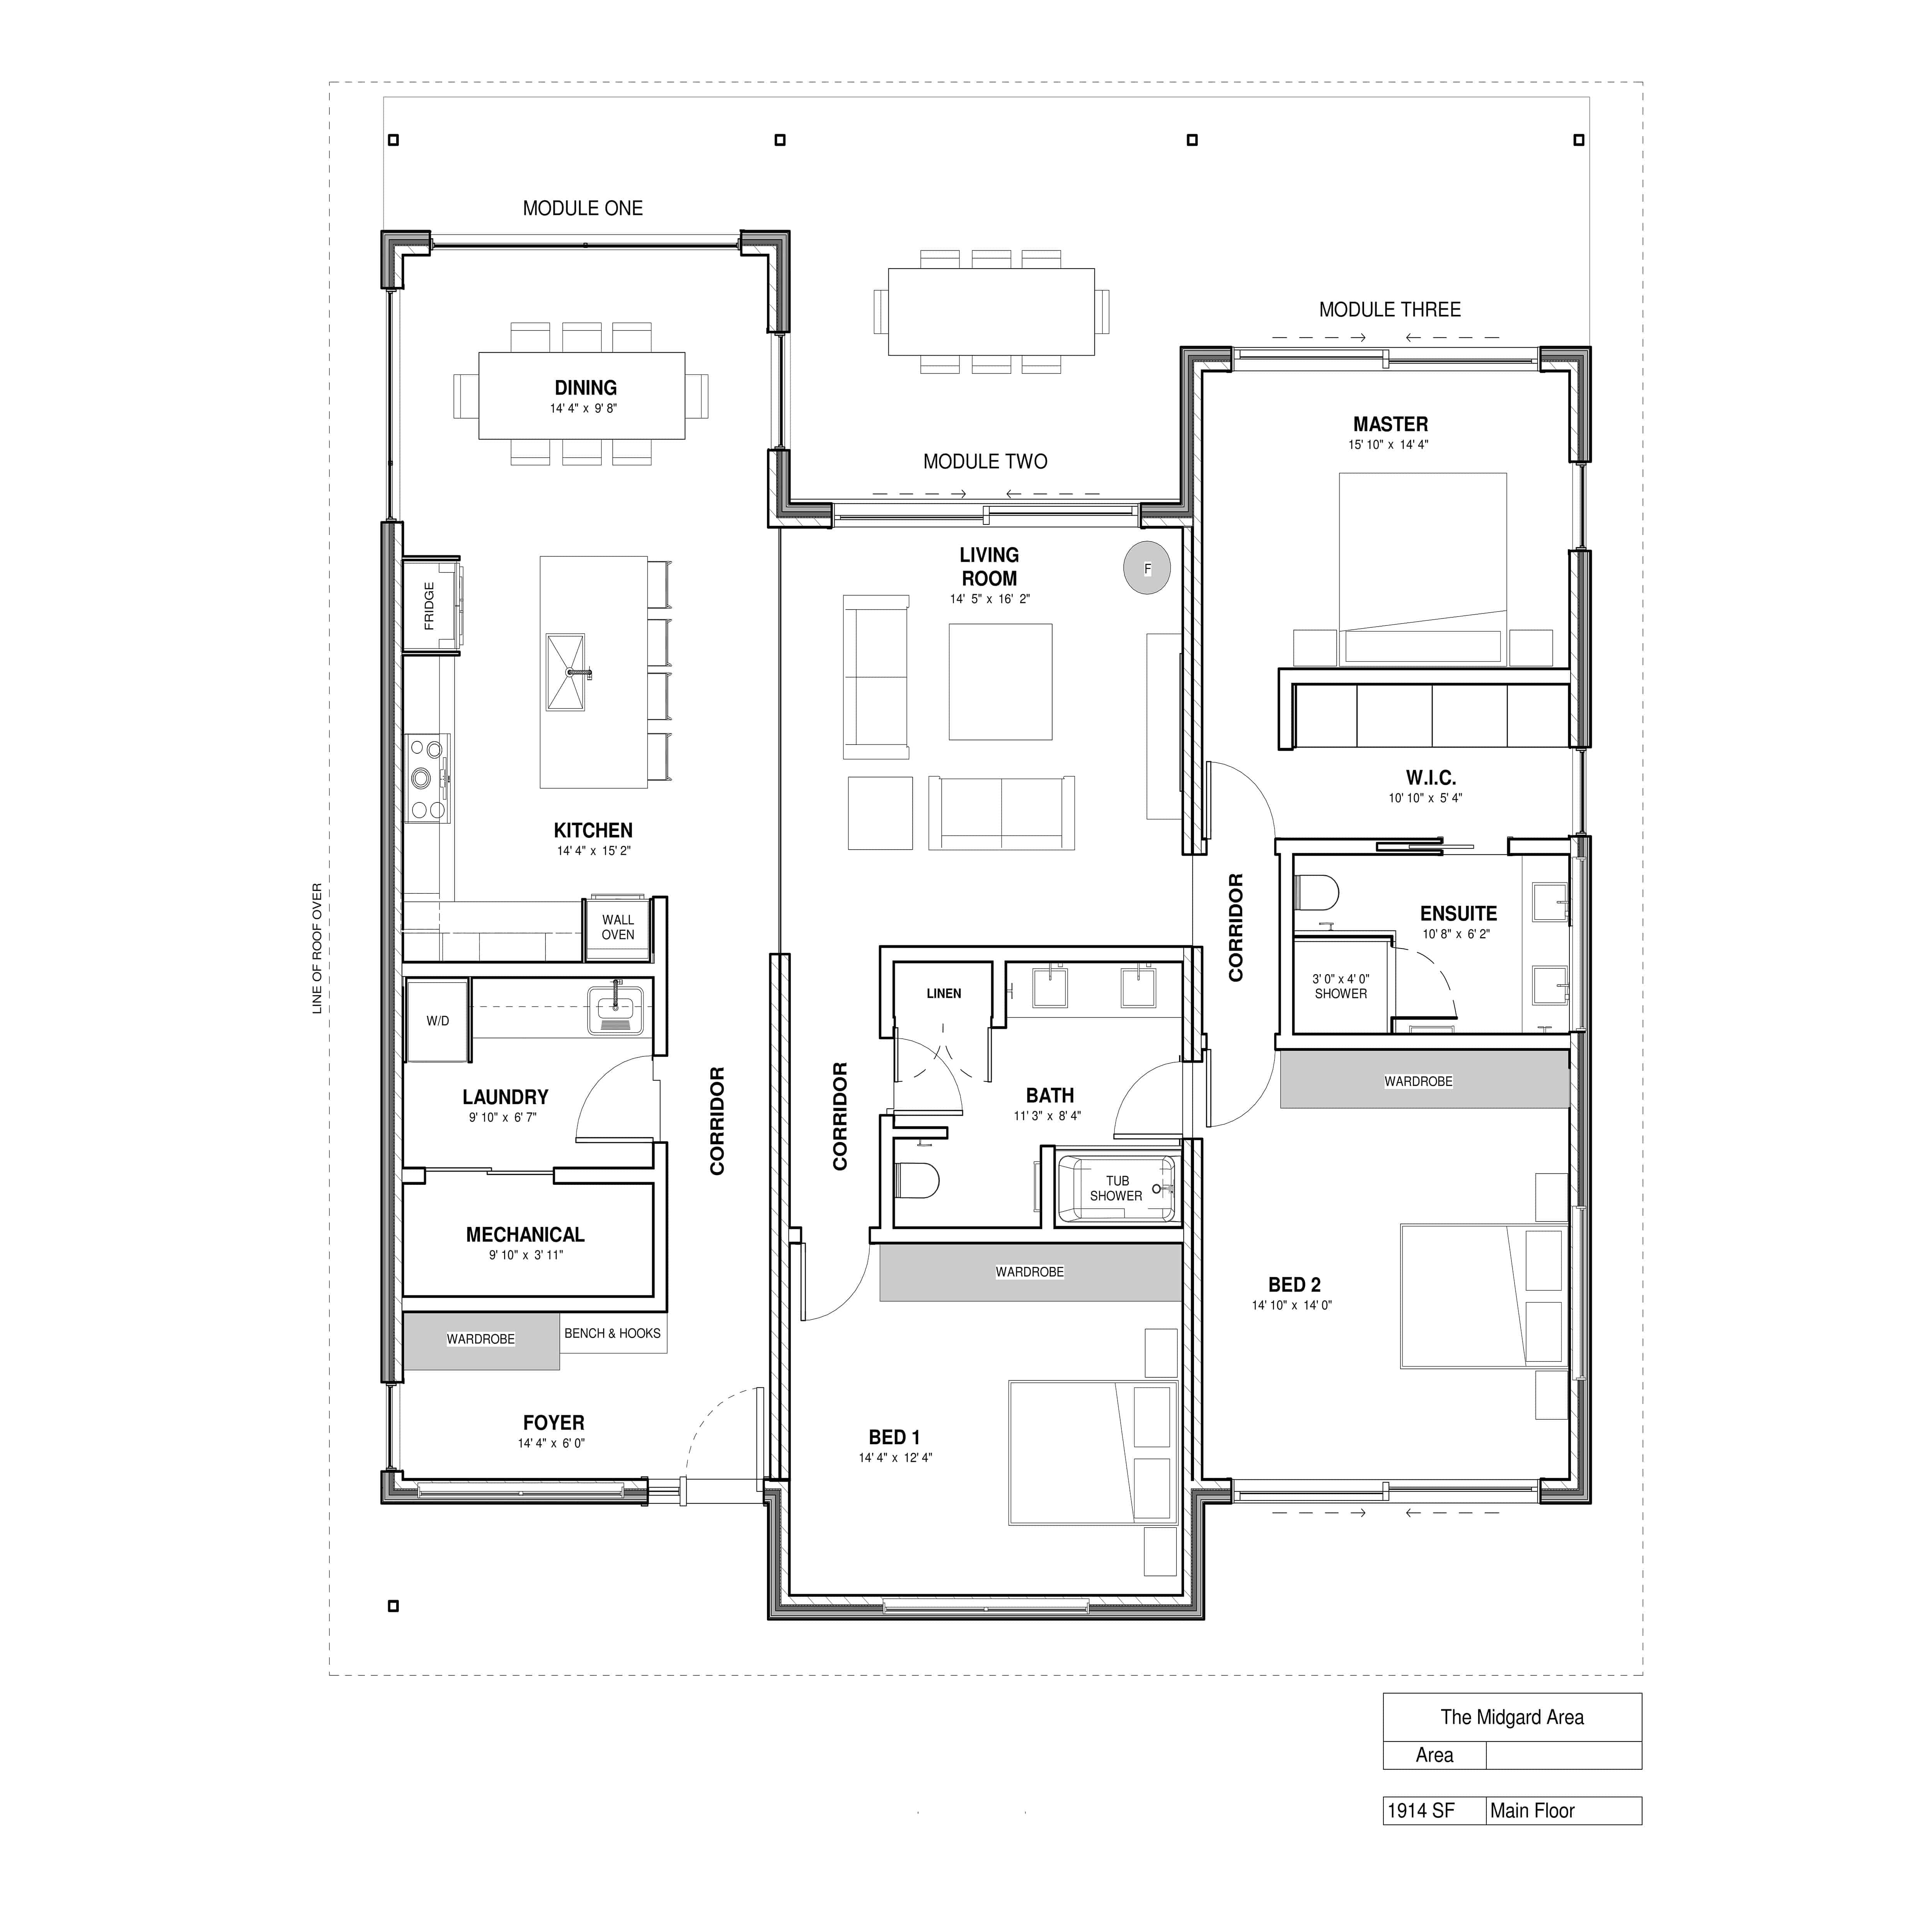 Dvele Midgard modern prefab home floor plan.